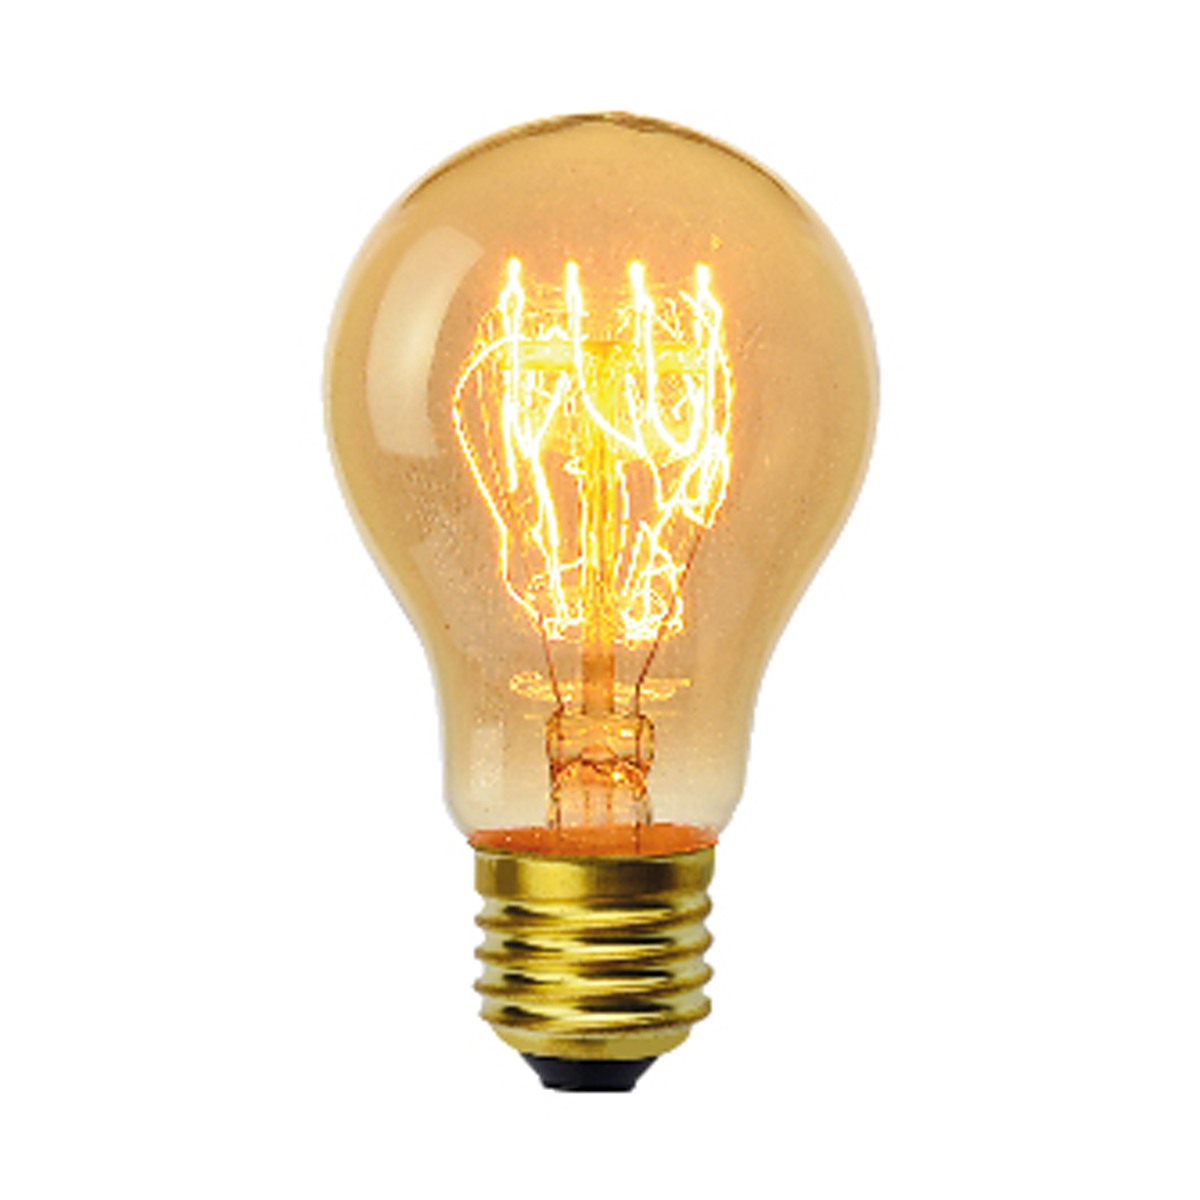 Works Лампа накаливания Эдисона EB40-E27-A60